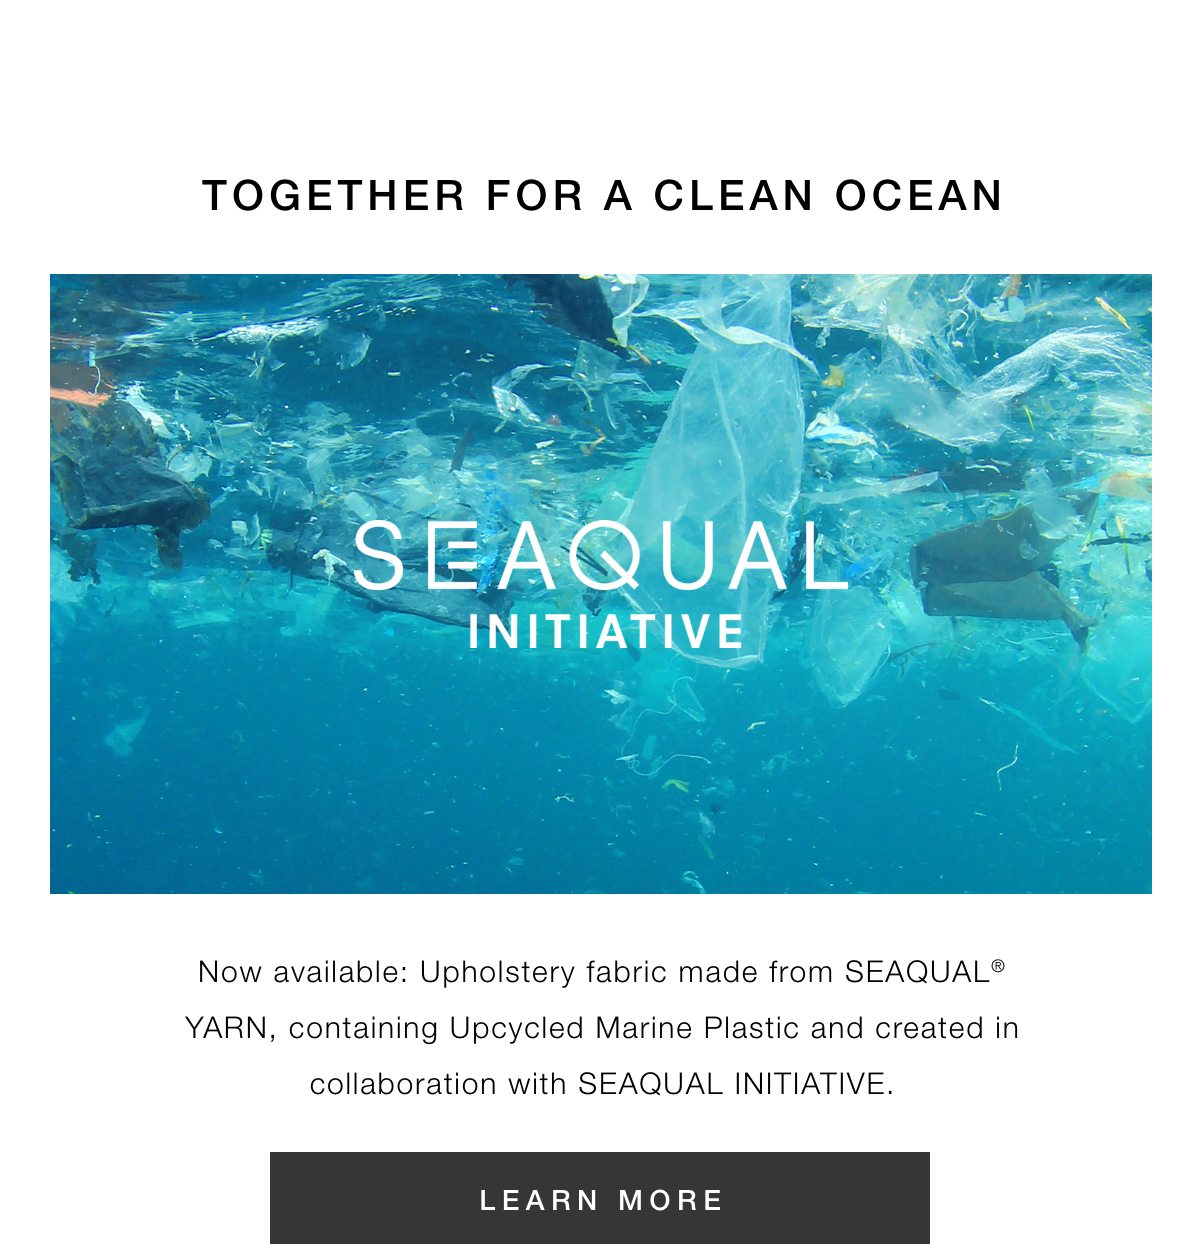 SEAQUAL Initiative. Learn more.